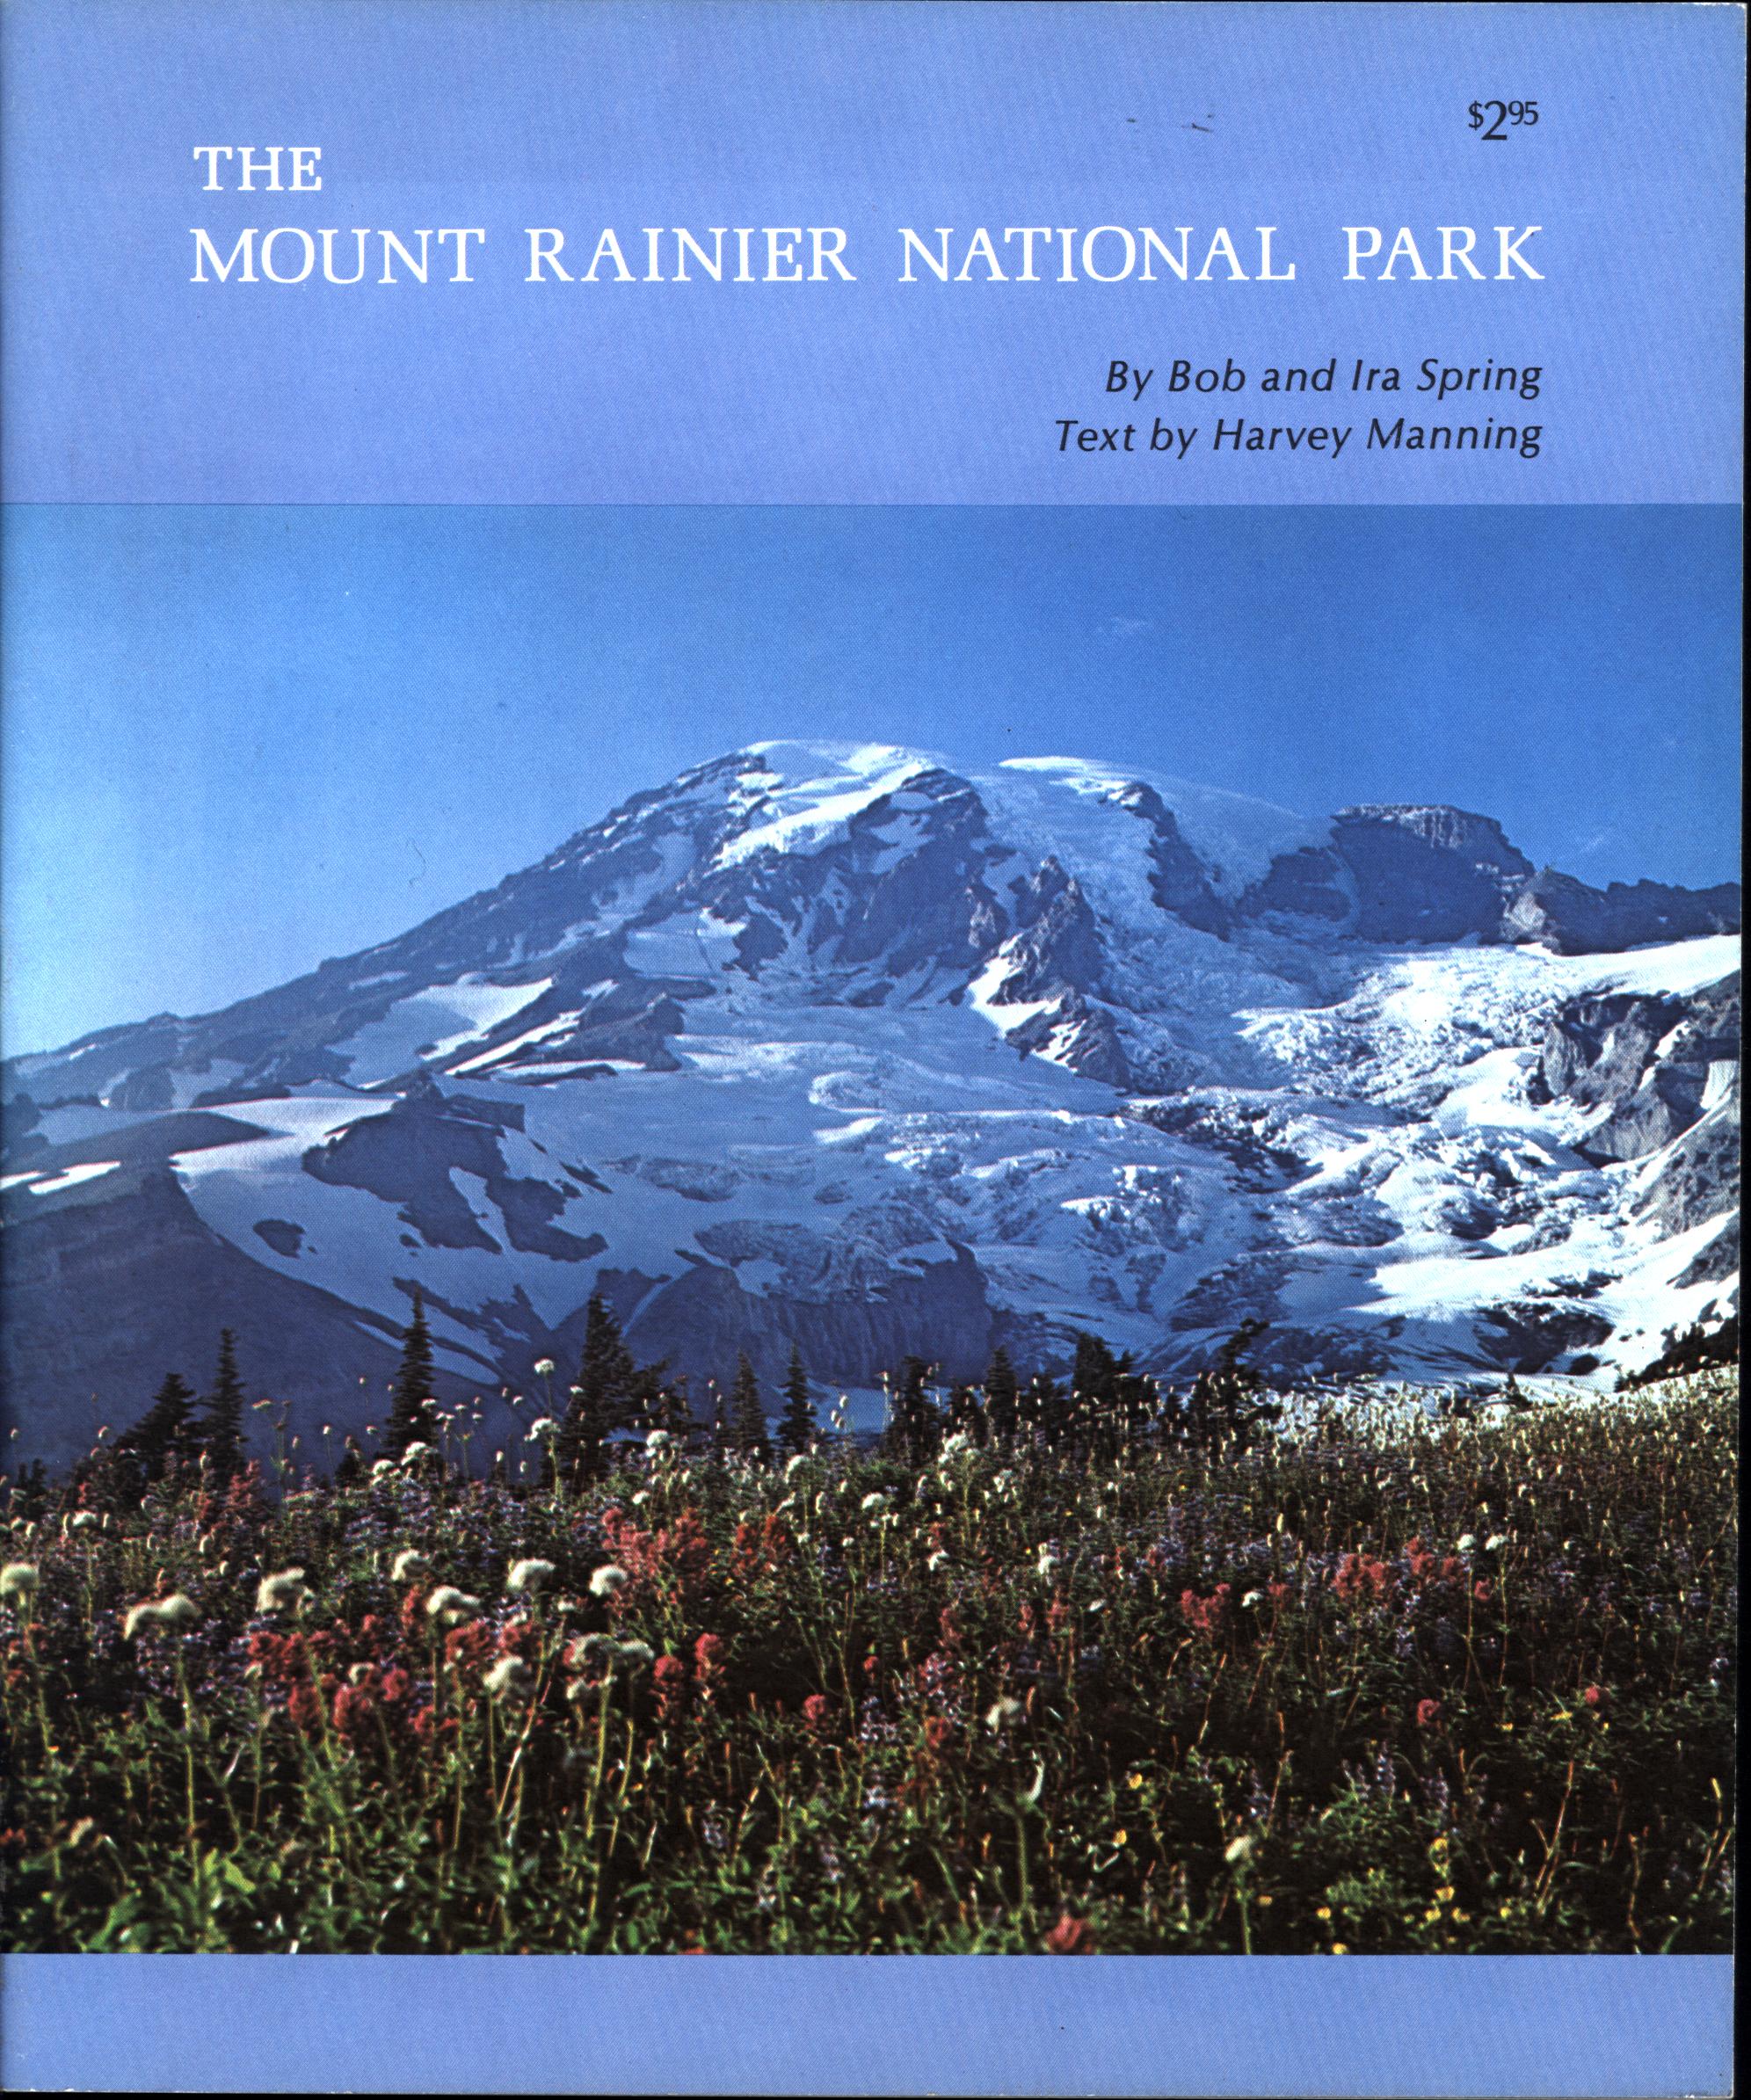 THE MOUNT RAINIER NATIONAL PARK (WA).